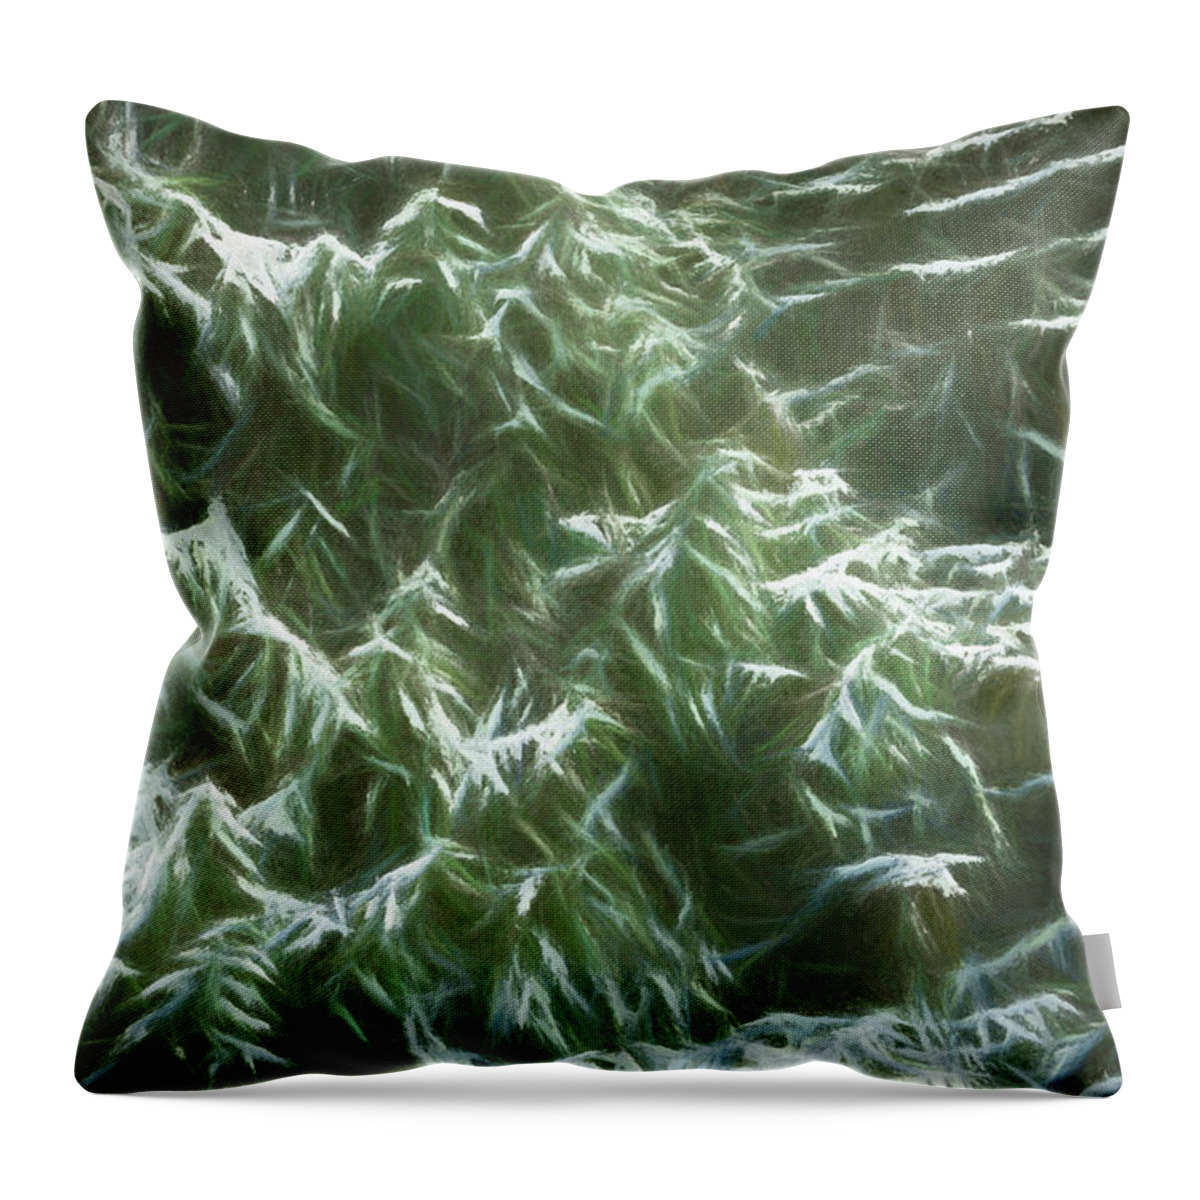 Winter Throw Pillow featuring the digital art Winter Snow on Pines by Jason Fink